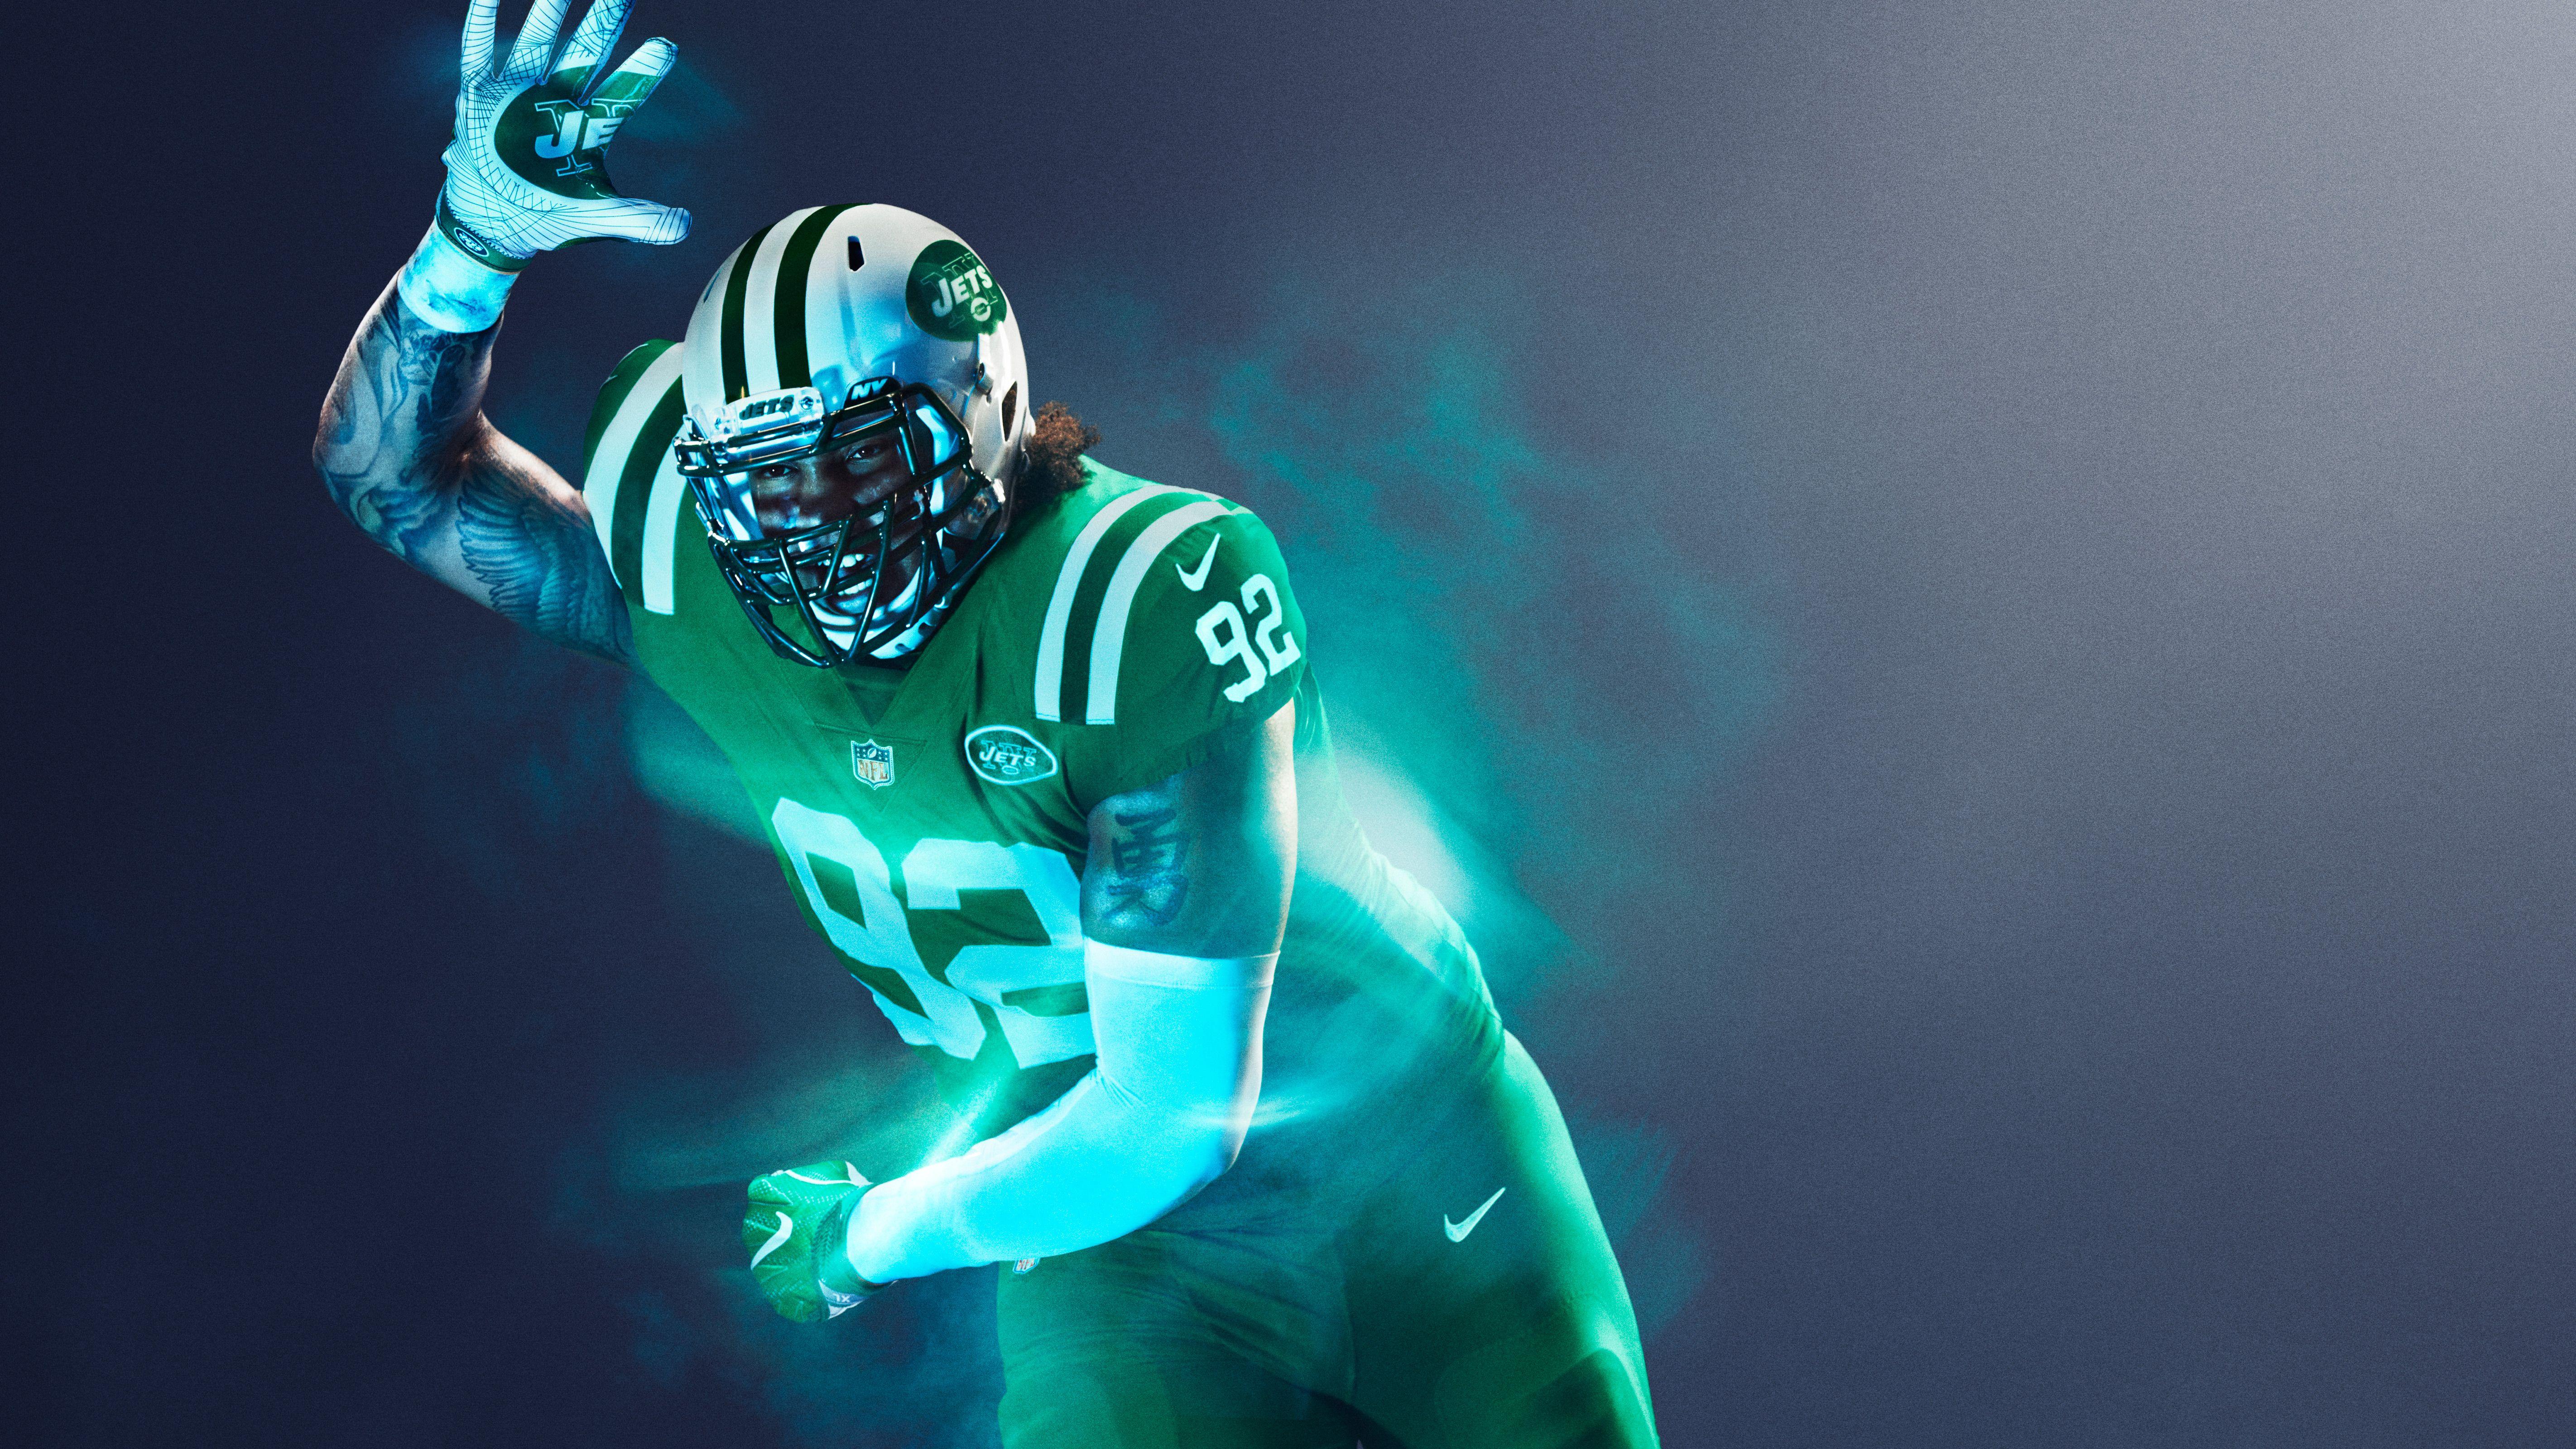 Nike and NFL Light Up Thursday Night Football